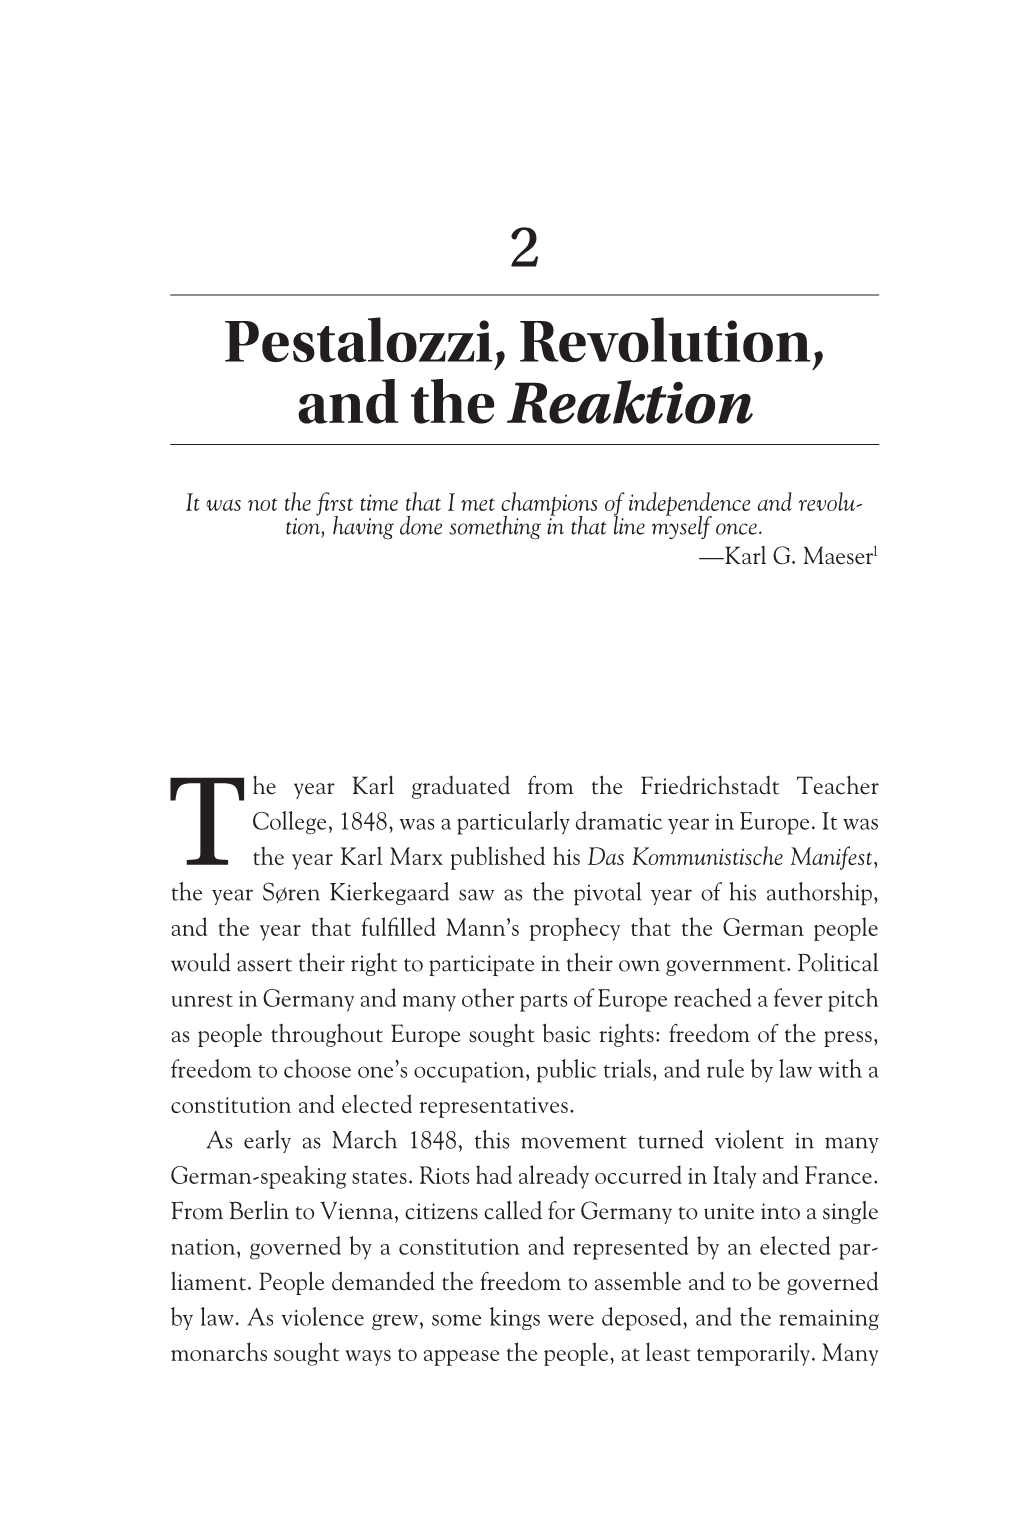 Pestalozzi, Revolution, and the Reaktion